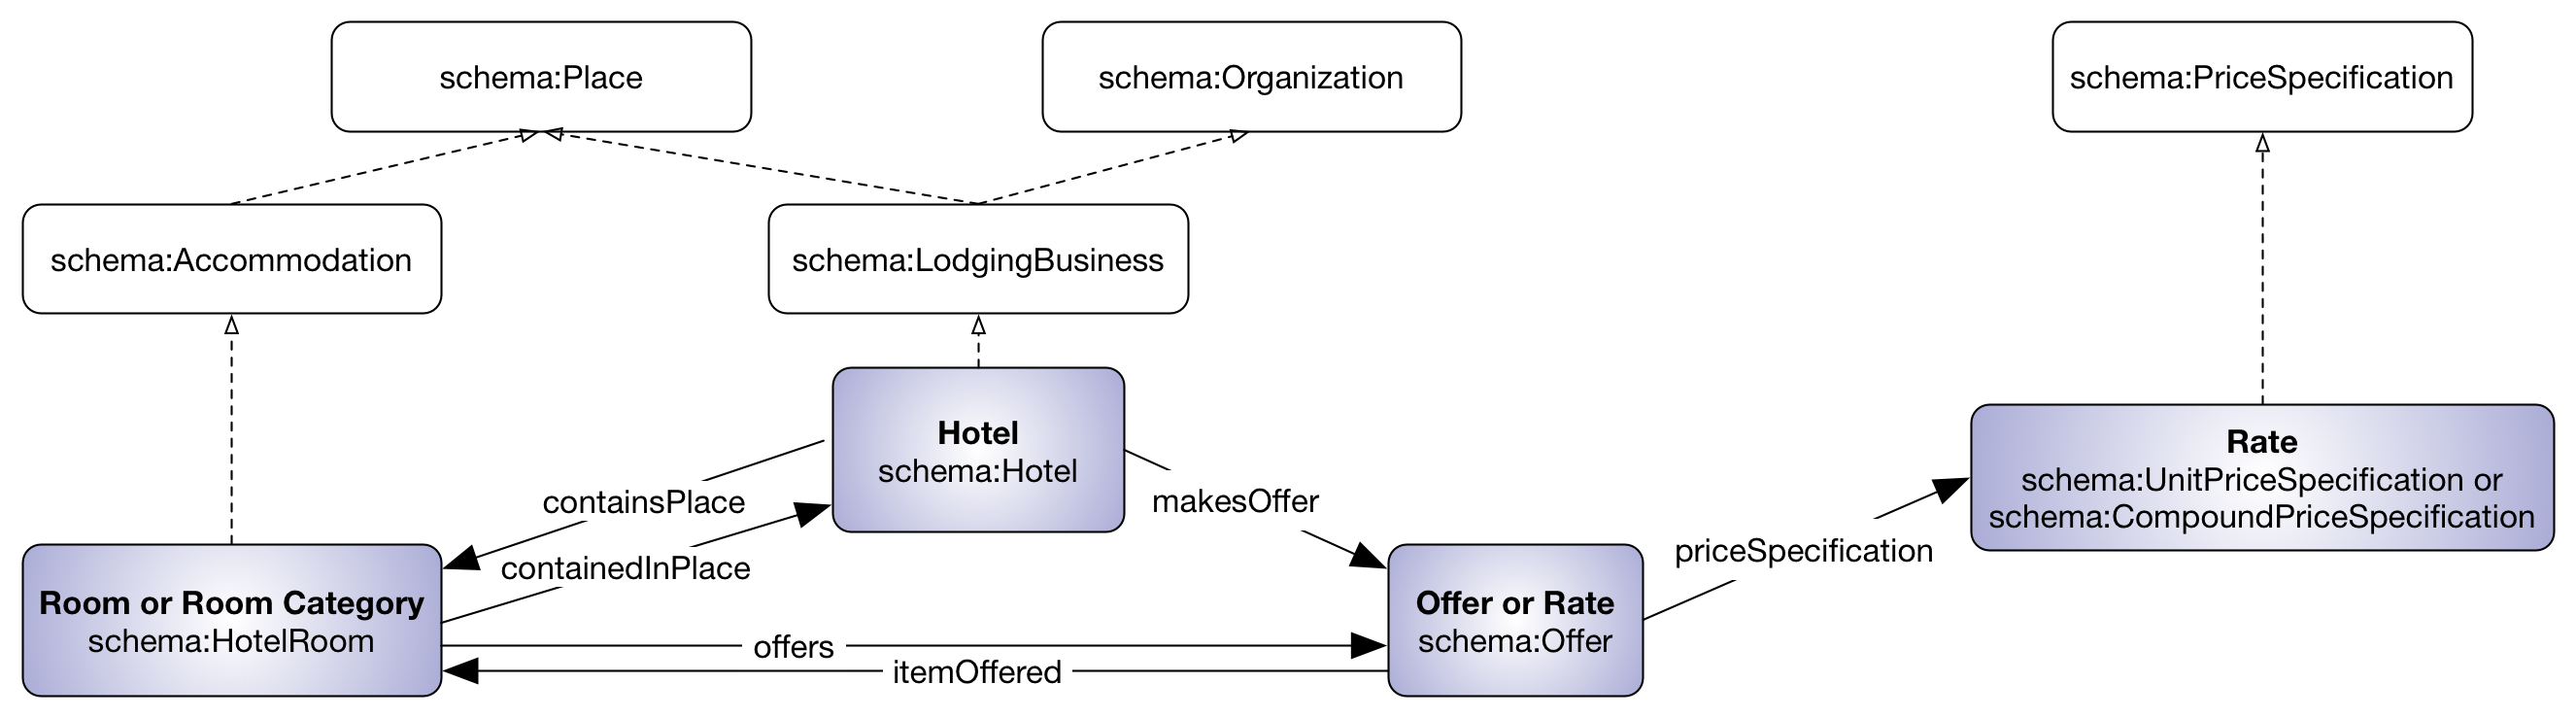 Schema.org pattern for describing hotel room offers